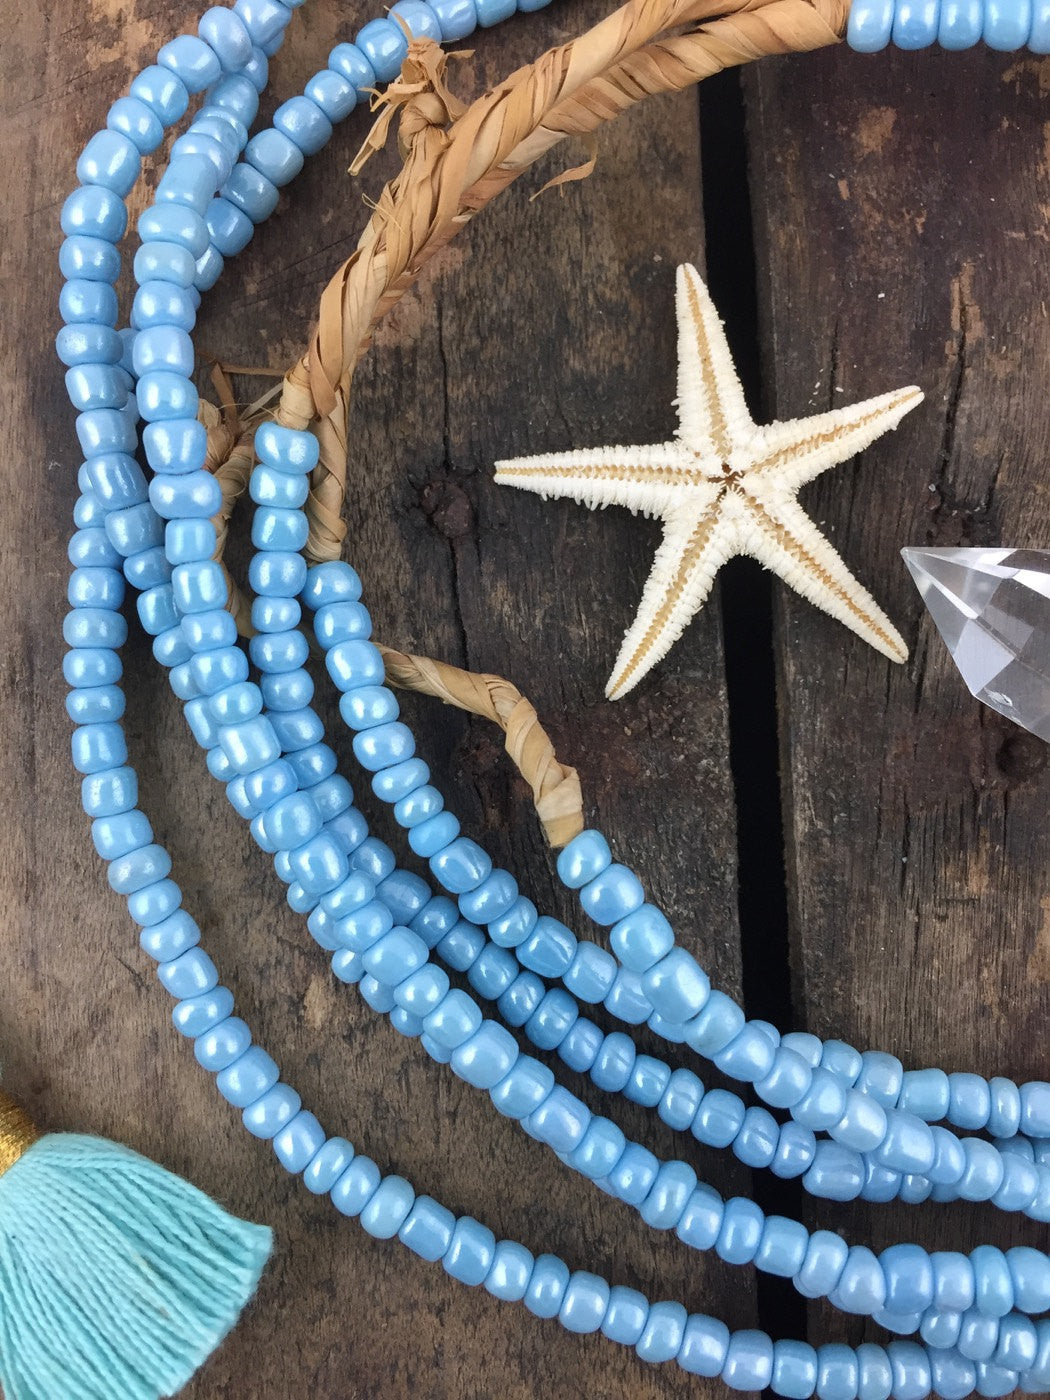 Sparkly Seas: Aura Aqua Blue Ghana Glass Rondelle Tube Beads, Asstd Sizes 4x3mm, African Spacer Beads, Jewelry Making Supply, Summer Fashion - ShopWomanShopsWorld.com. Bone Beads, Tassels, Pom Poms, African Beads.